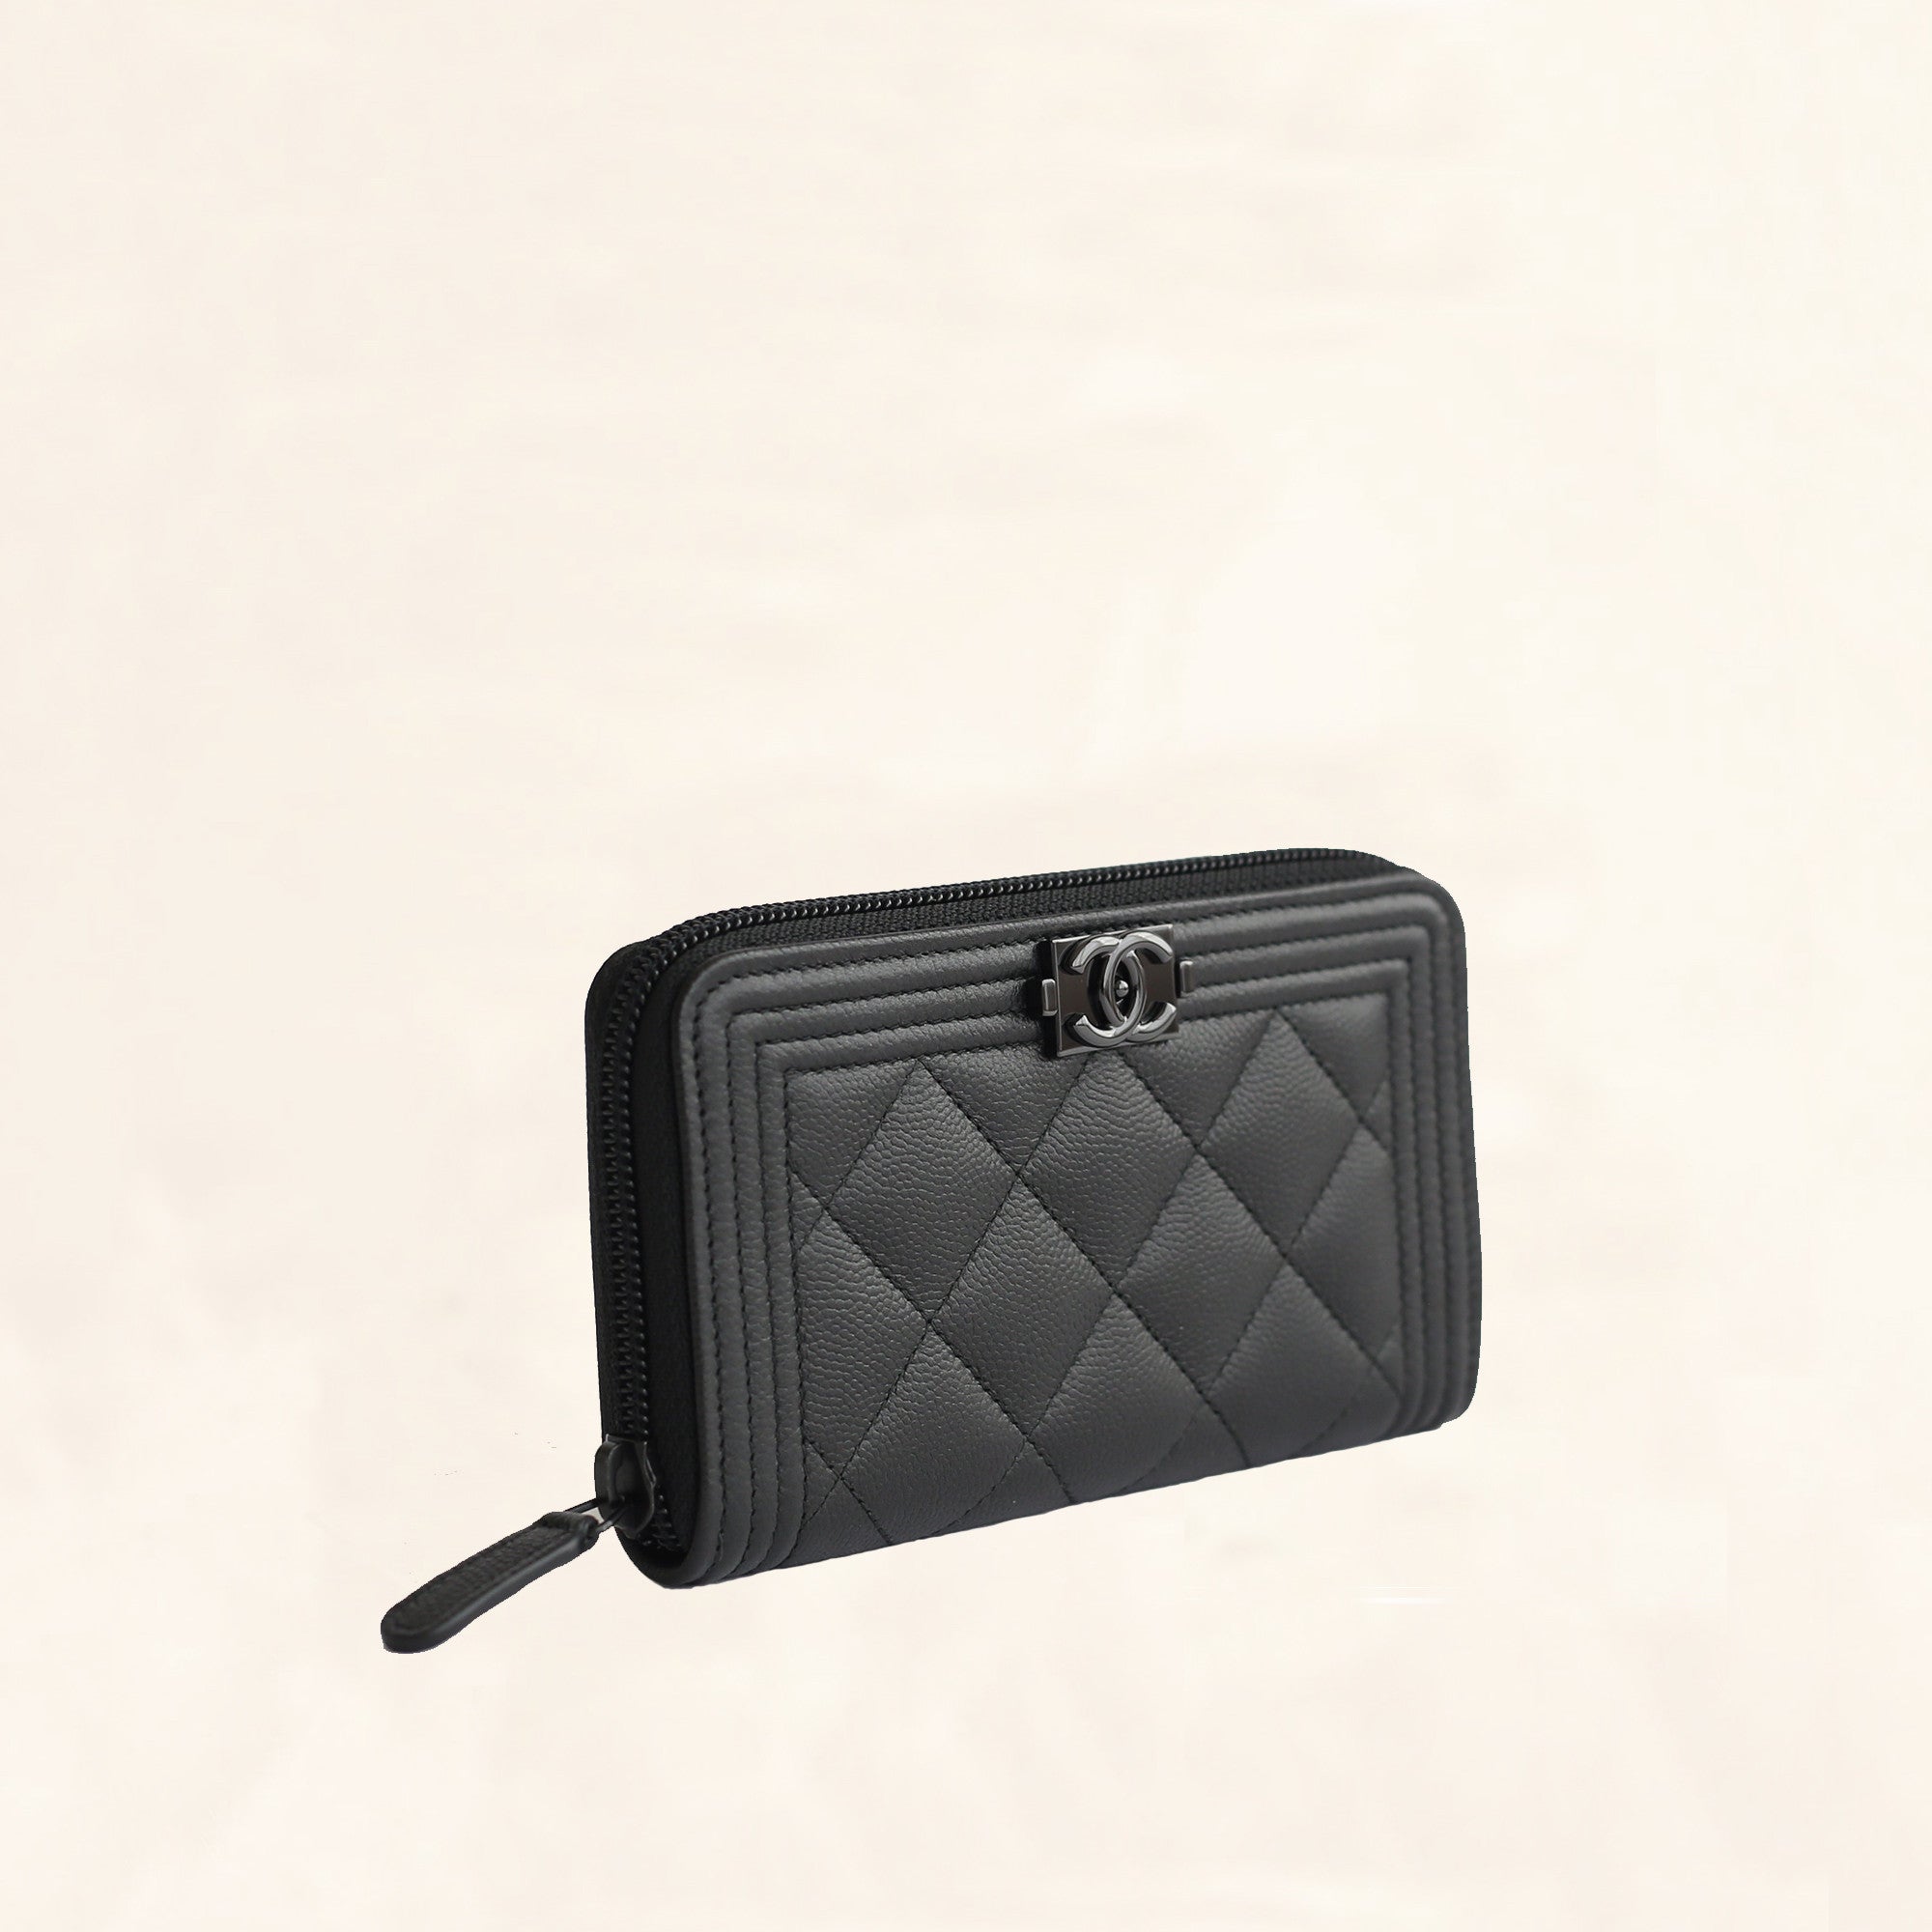 Chanel Boy's Zippy Compact Wallet